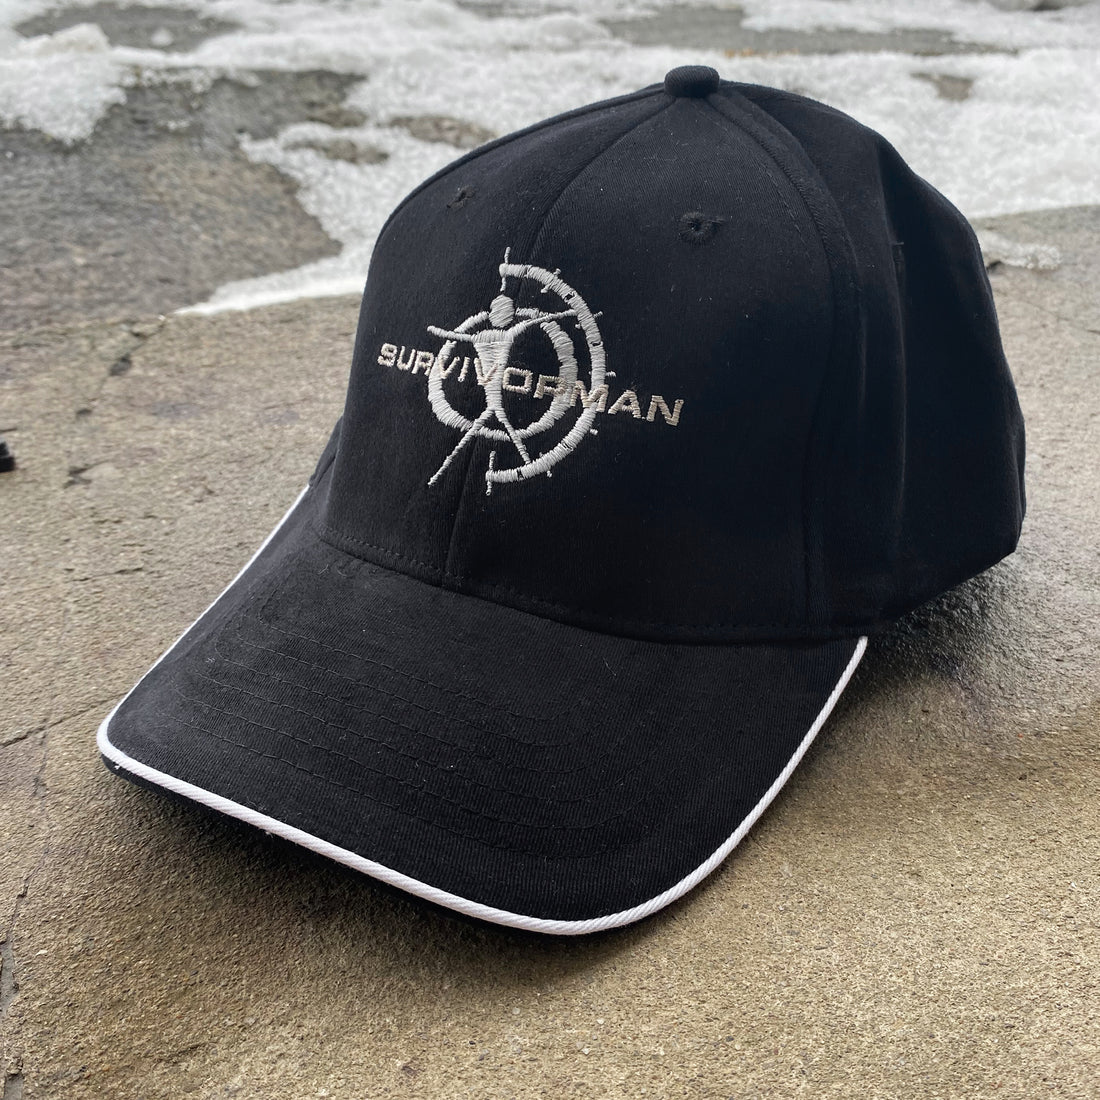 Survivorman - Black w/ White Rim Hat